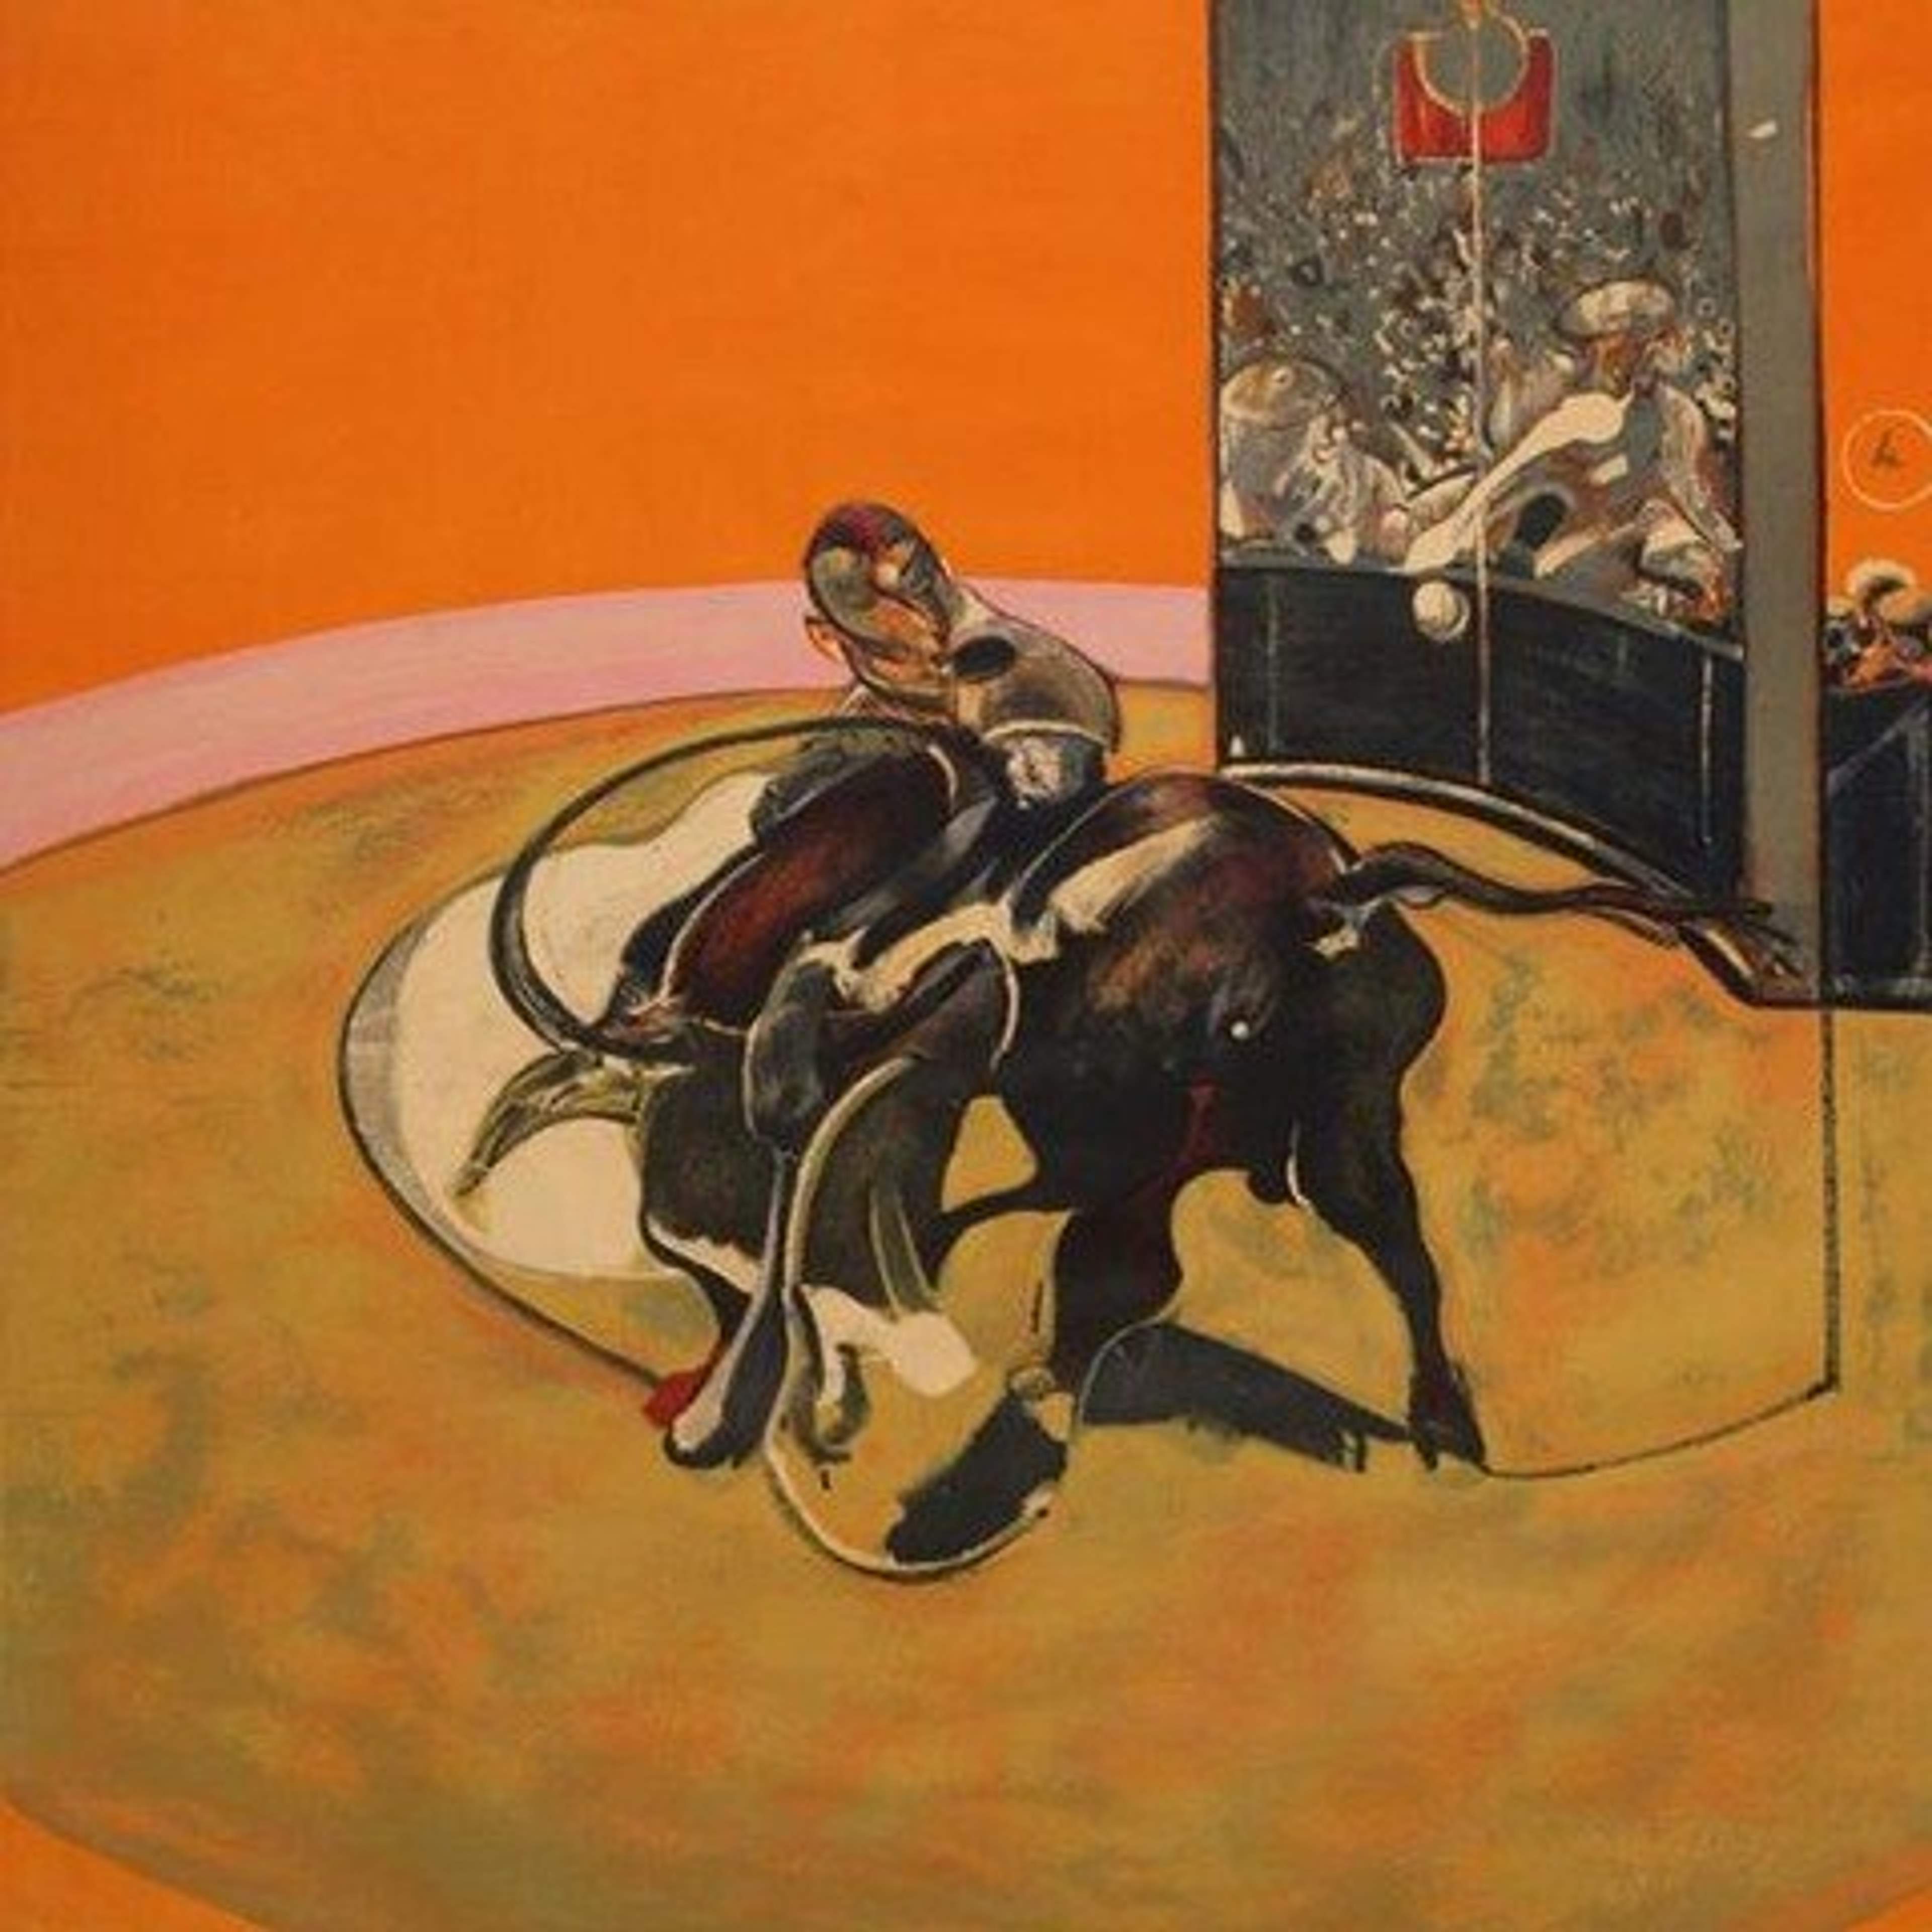 Miroir De La Tauromachie by Francis Bacon - MyArtBroker